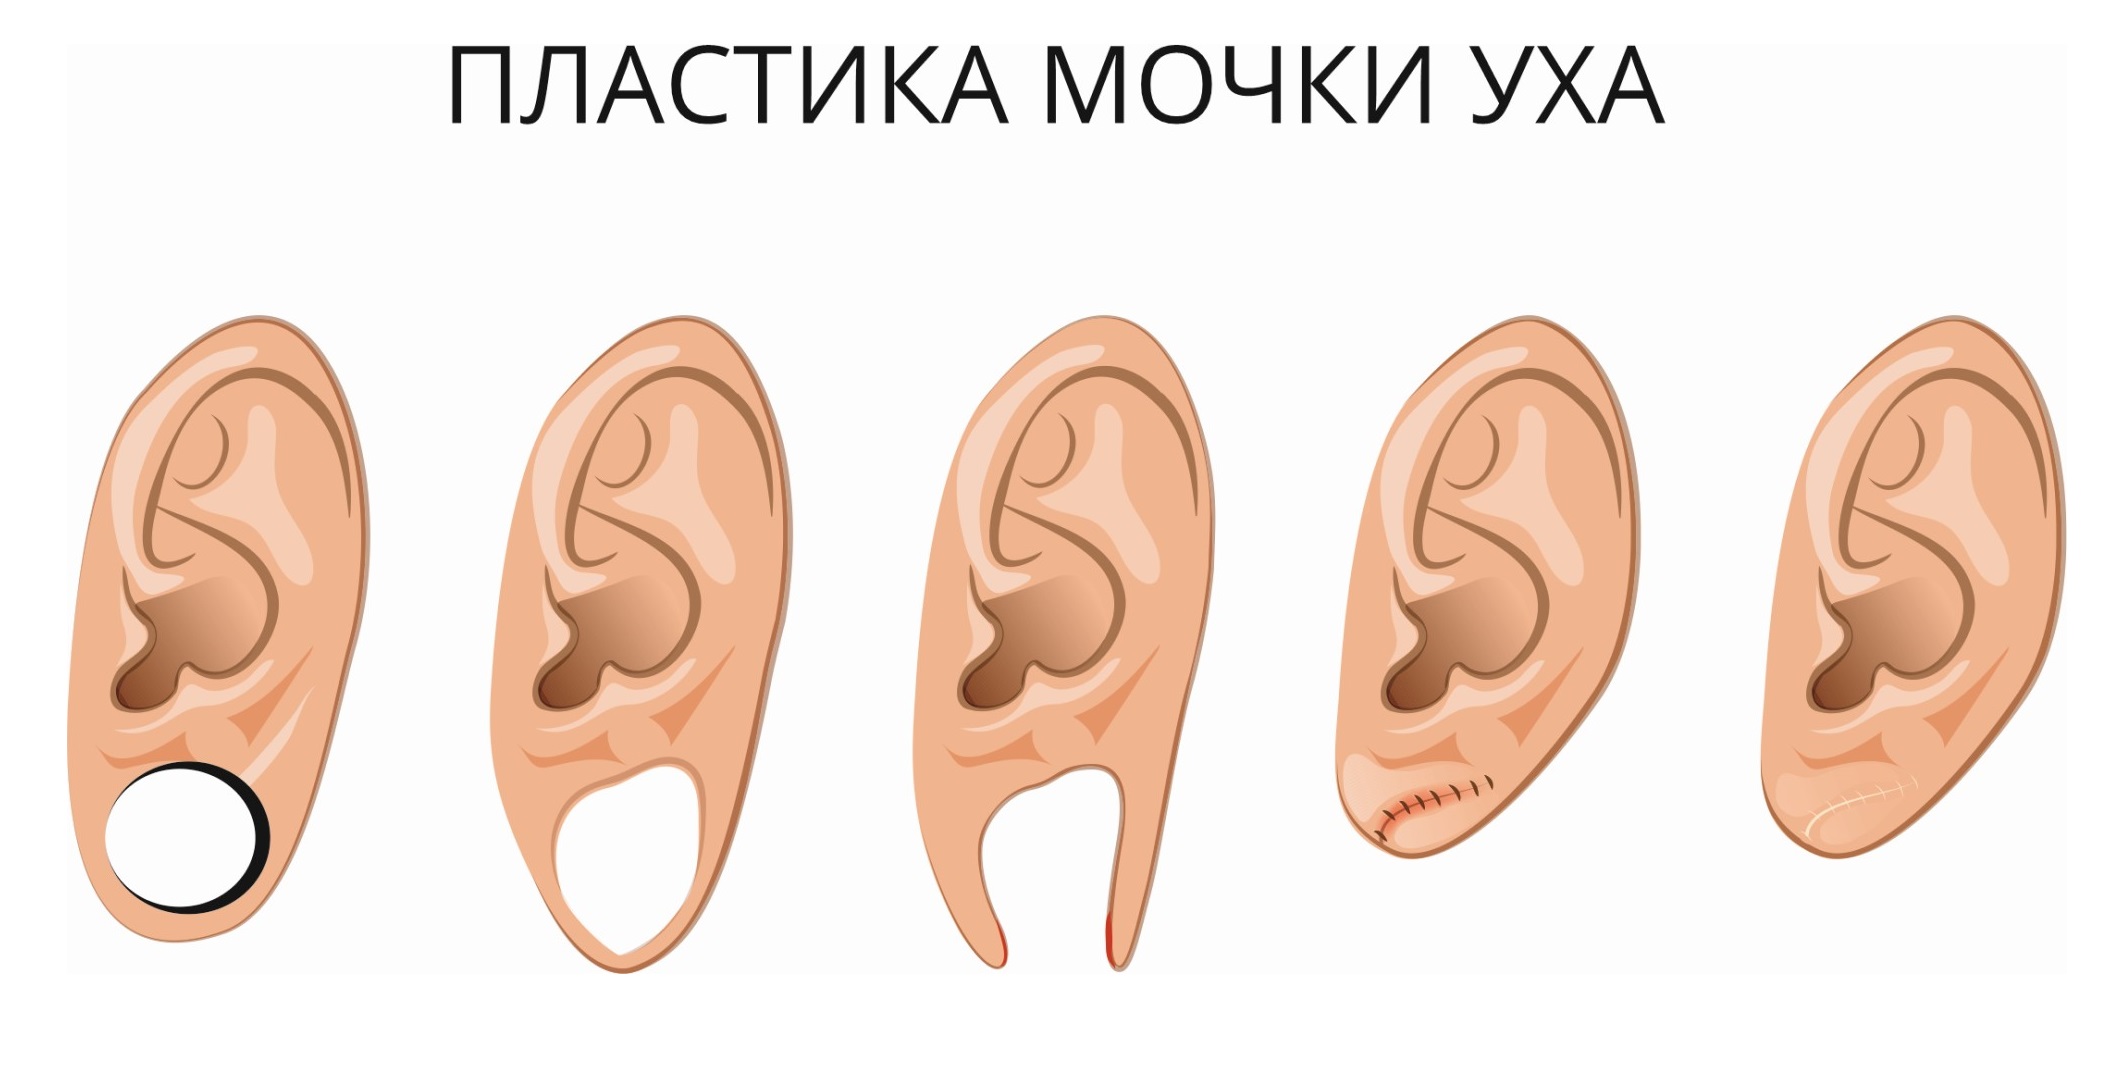 Пластика мочки уха